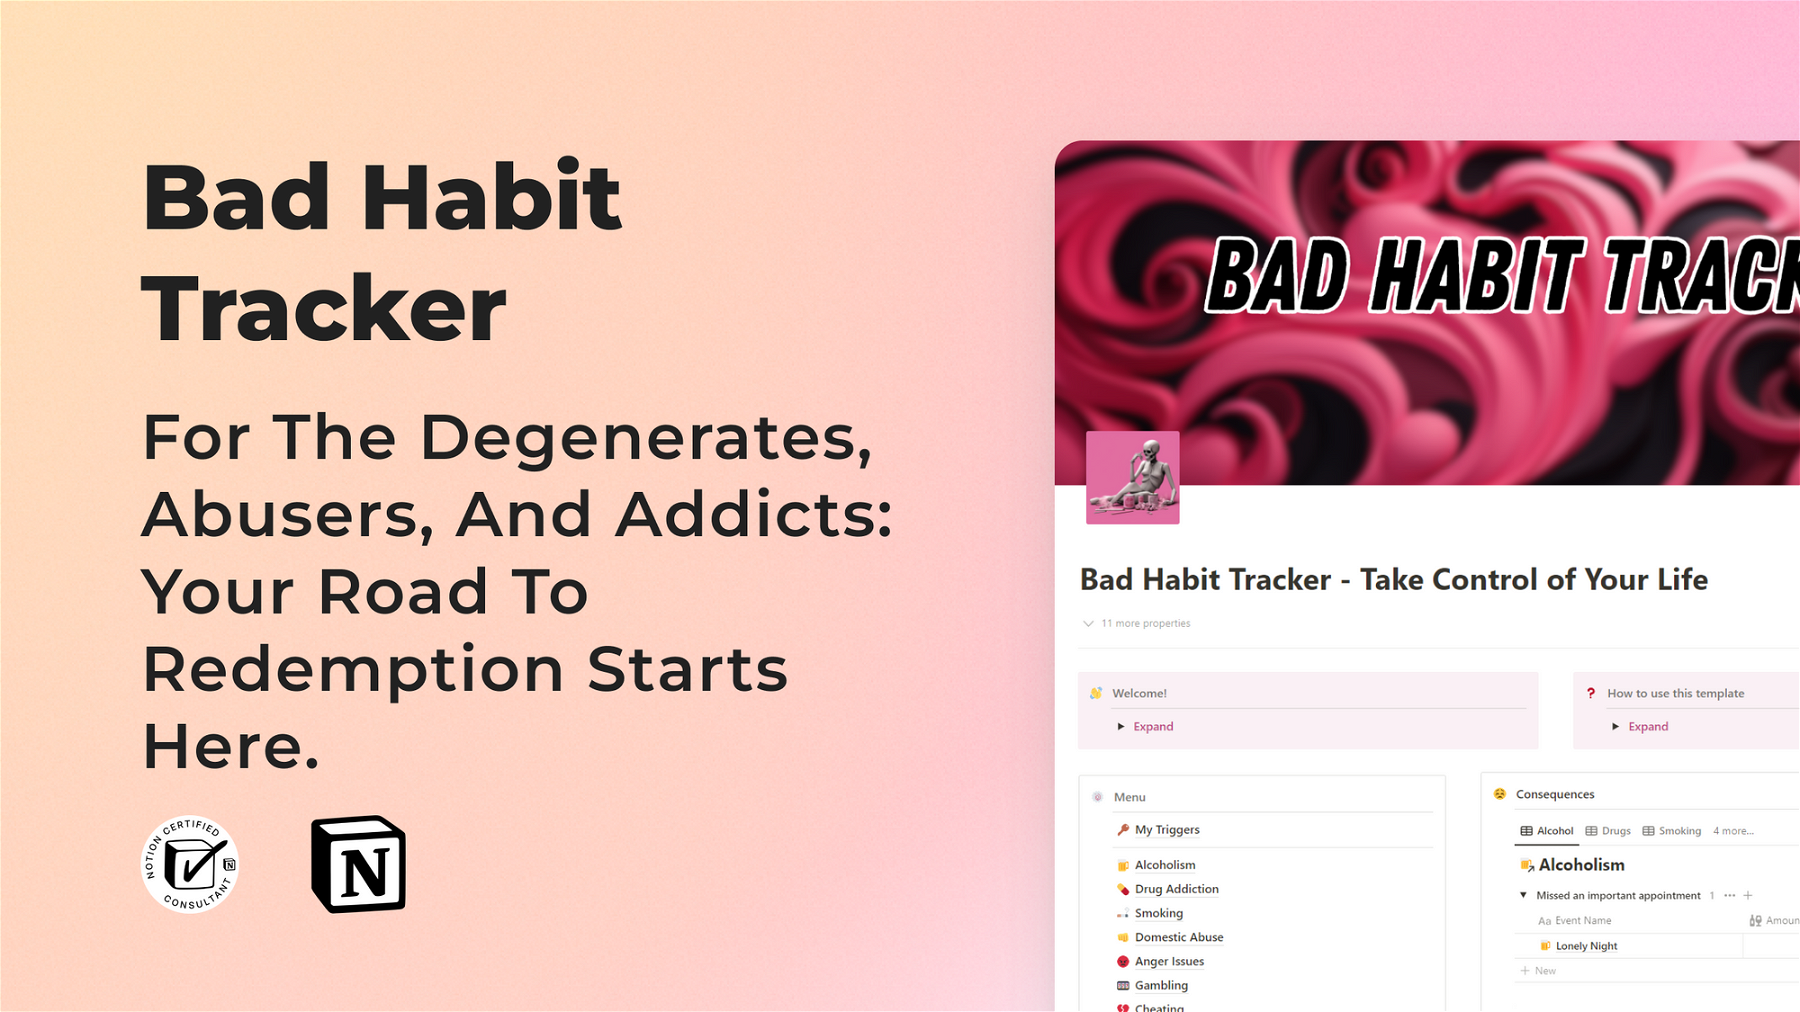 ðŸš« Bad Habit Tracker - Take Control of Your Life